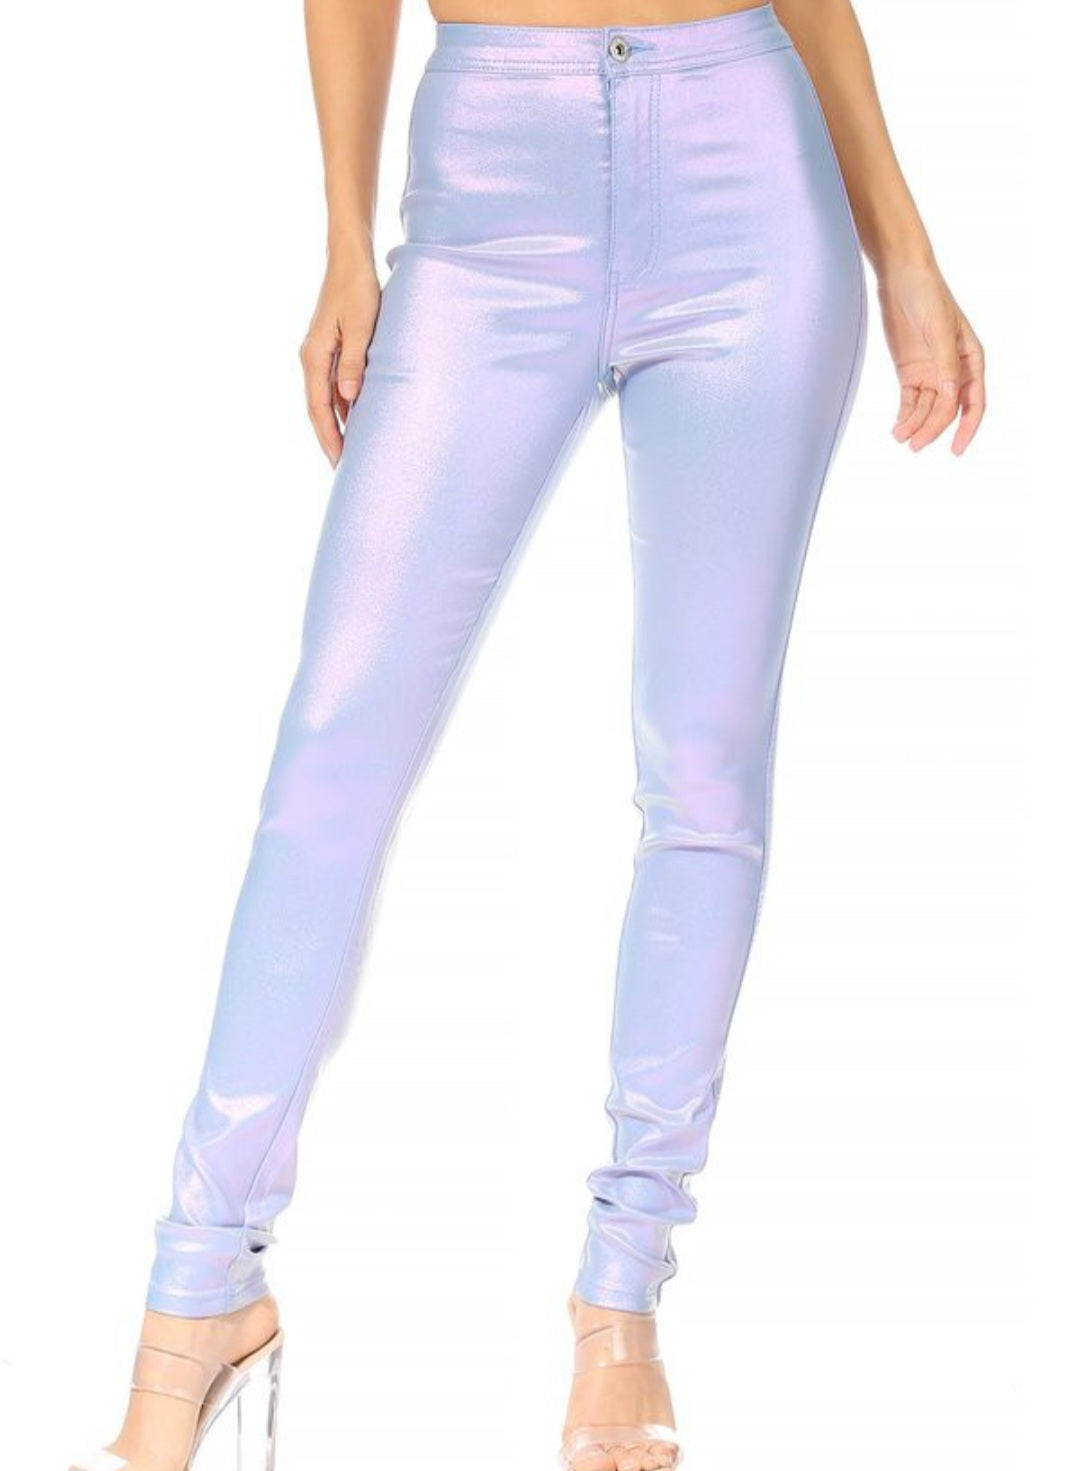 Lavender metallic jeans (stretchy)